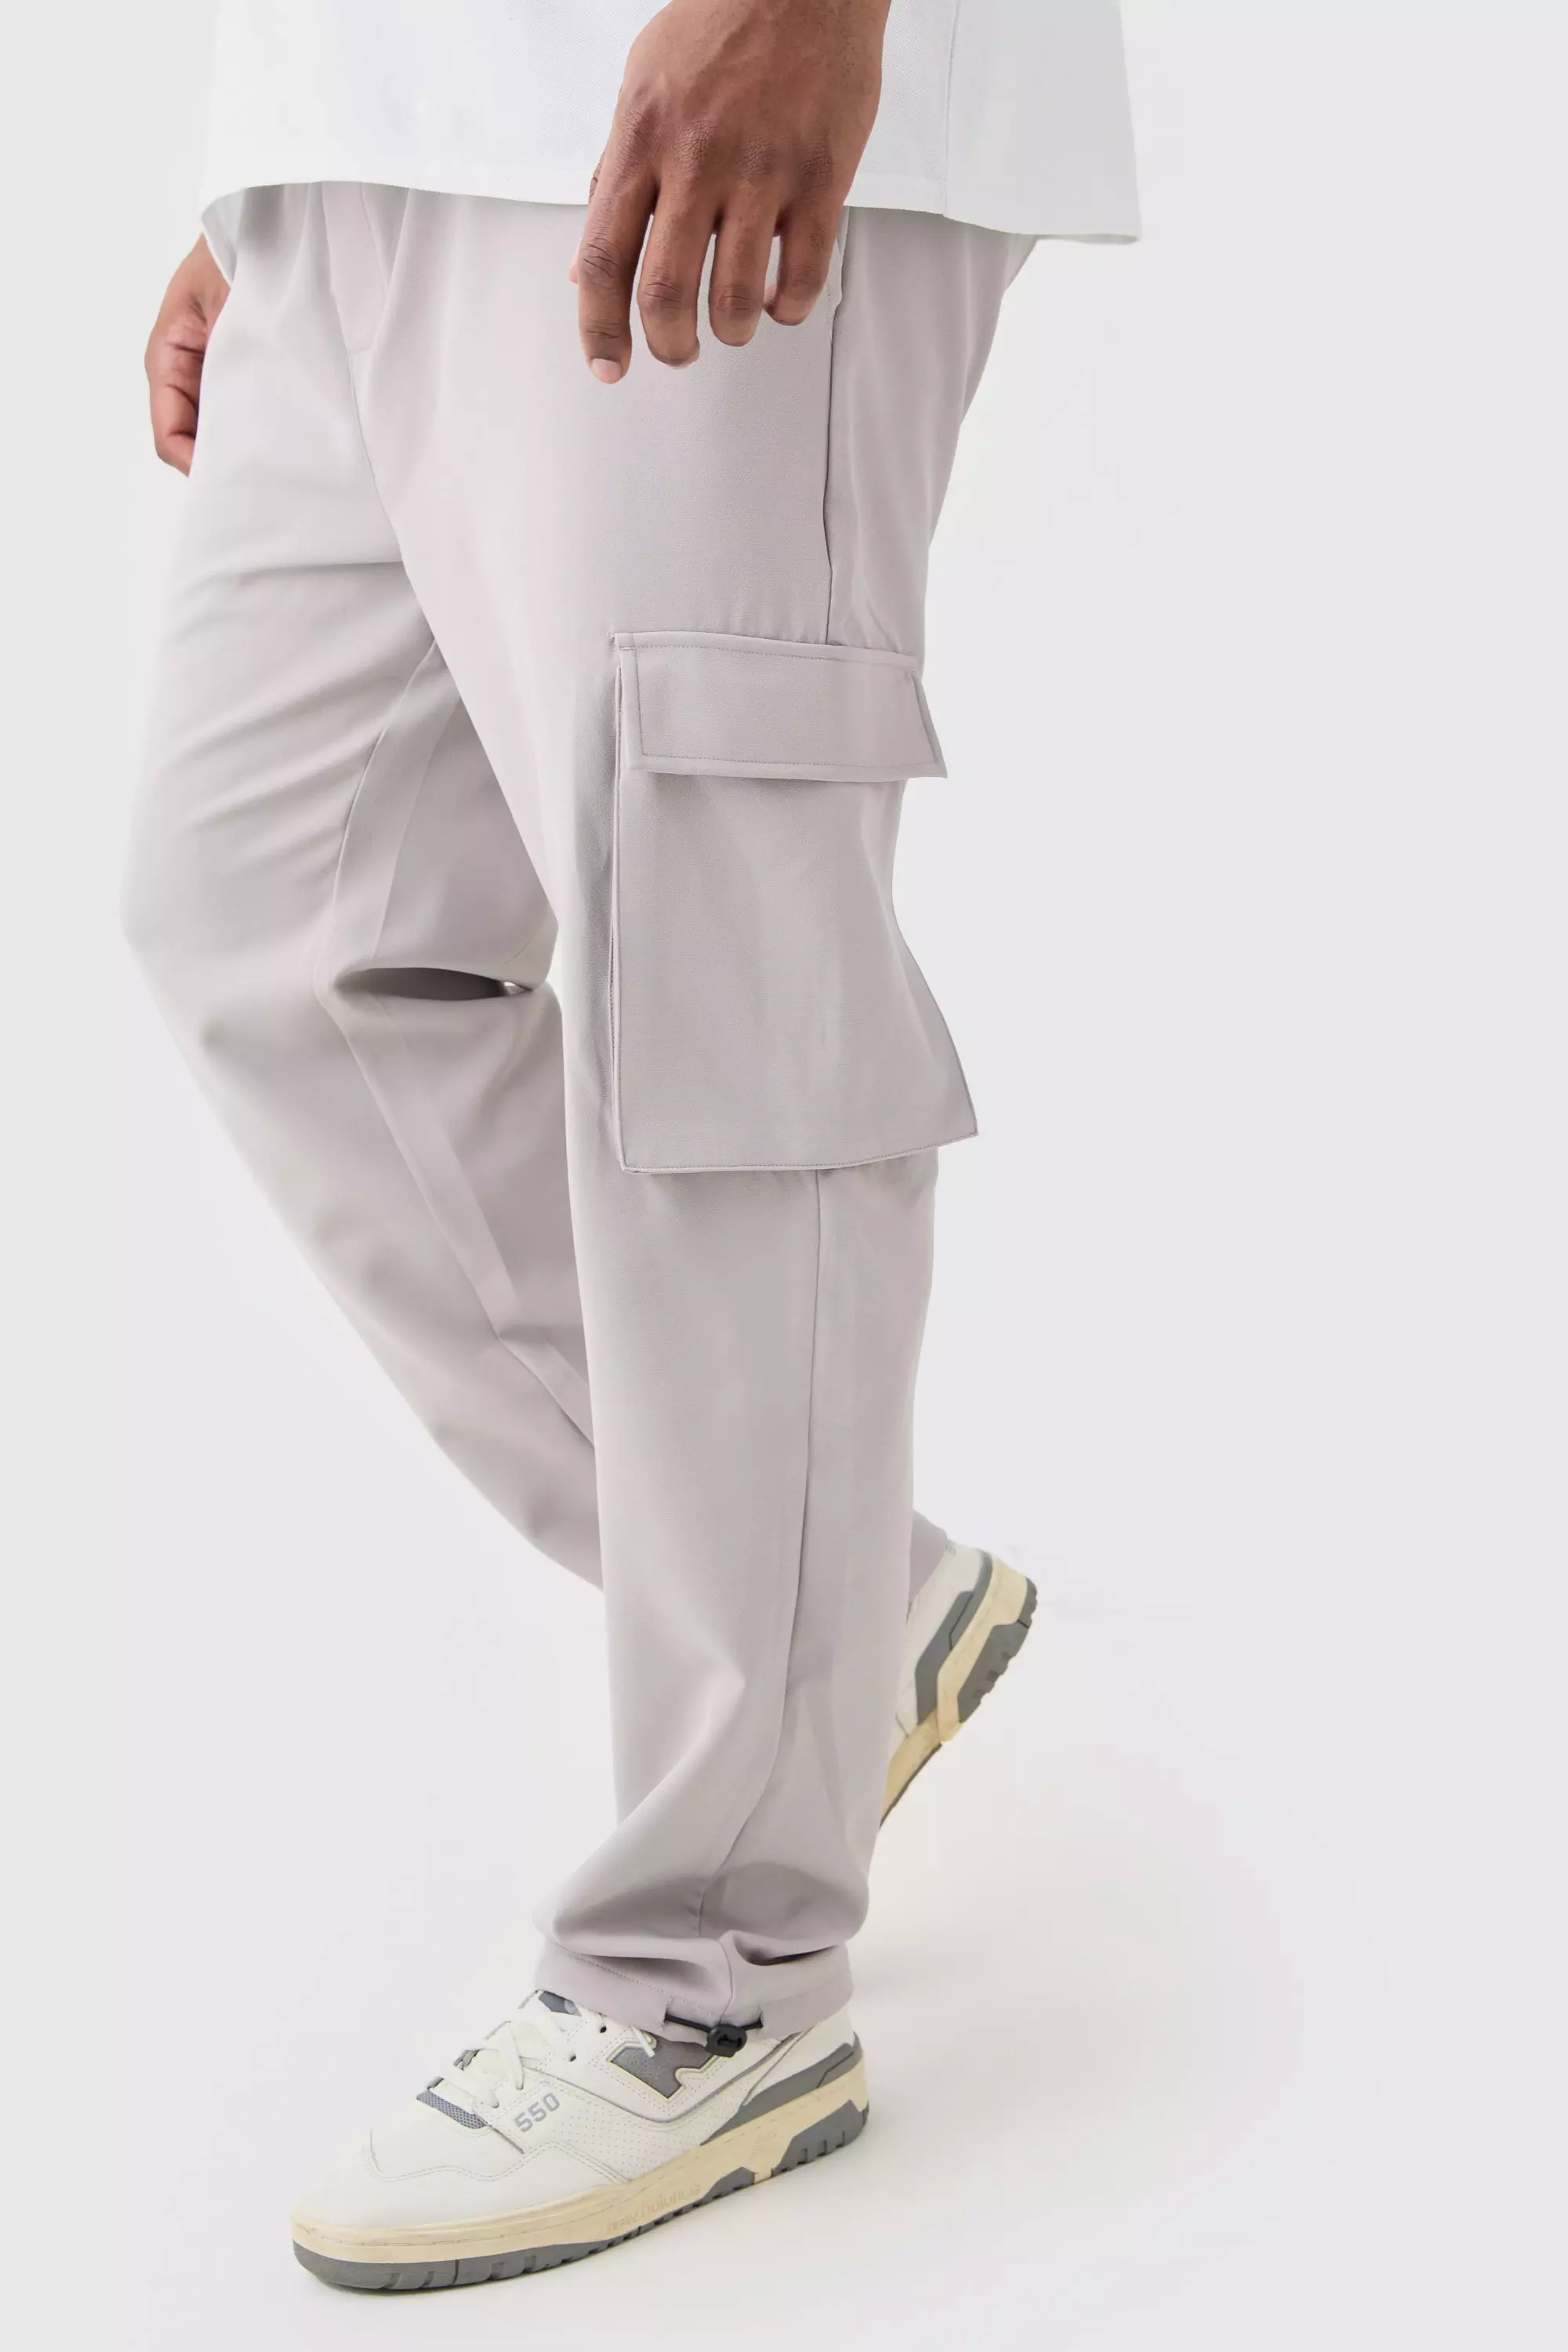 Charcoal Grey Plus Elastic Lightweight Stretch Skinny Cargo Trouser